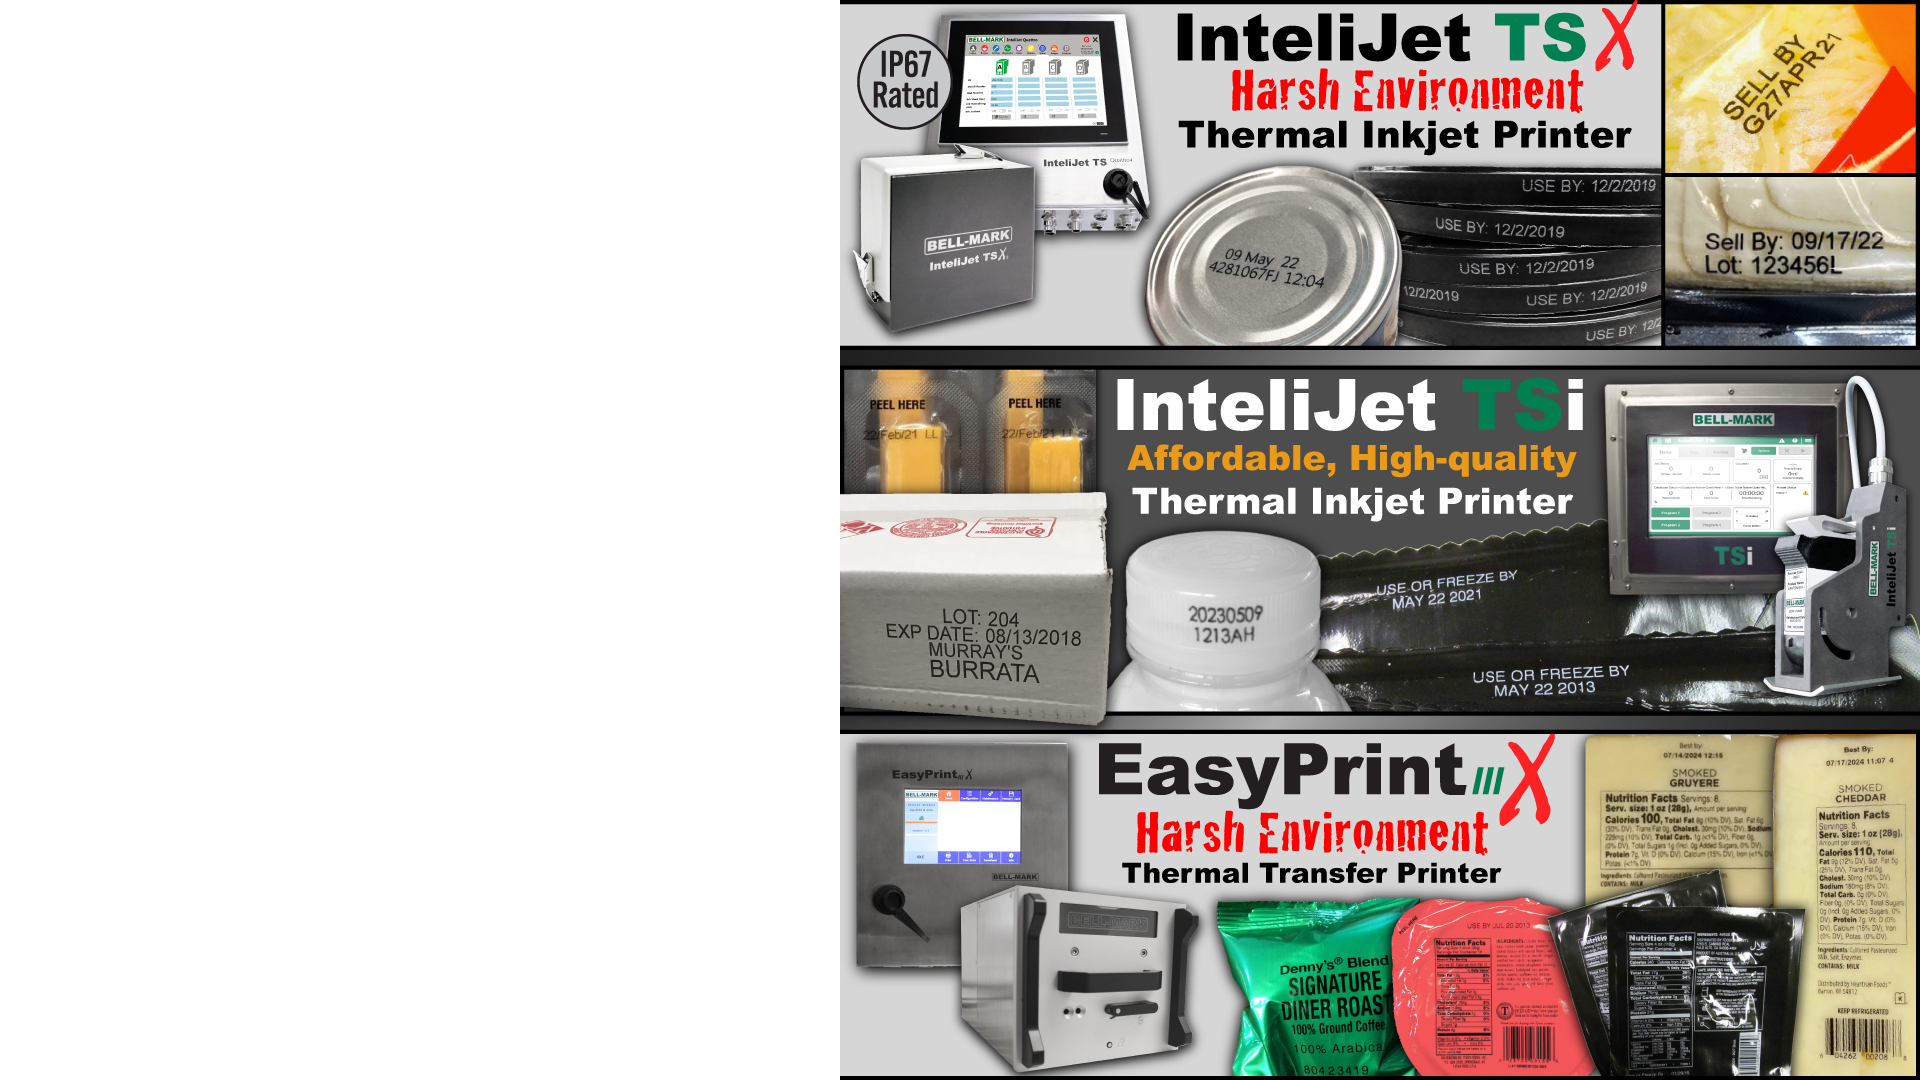 InteliJet TSX Harsh Environment Thermal Inkjet Printer | InteliJet TSi Affordable, High-quality Thermal Inkjet Printer |
										EasyPrint III X Harsh Environment Thermal Transfer Printer